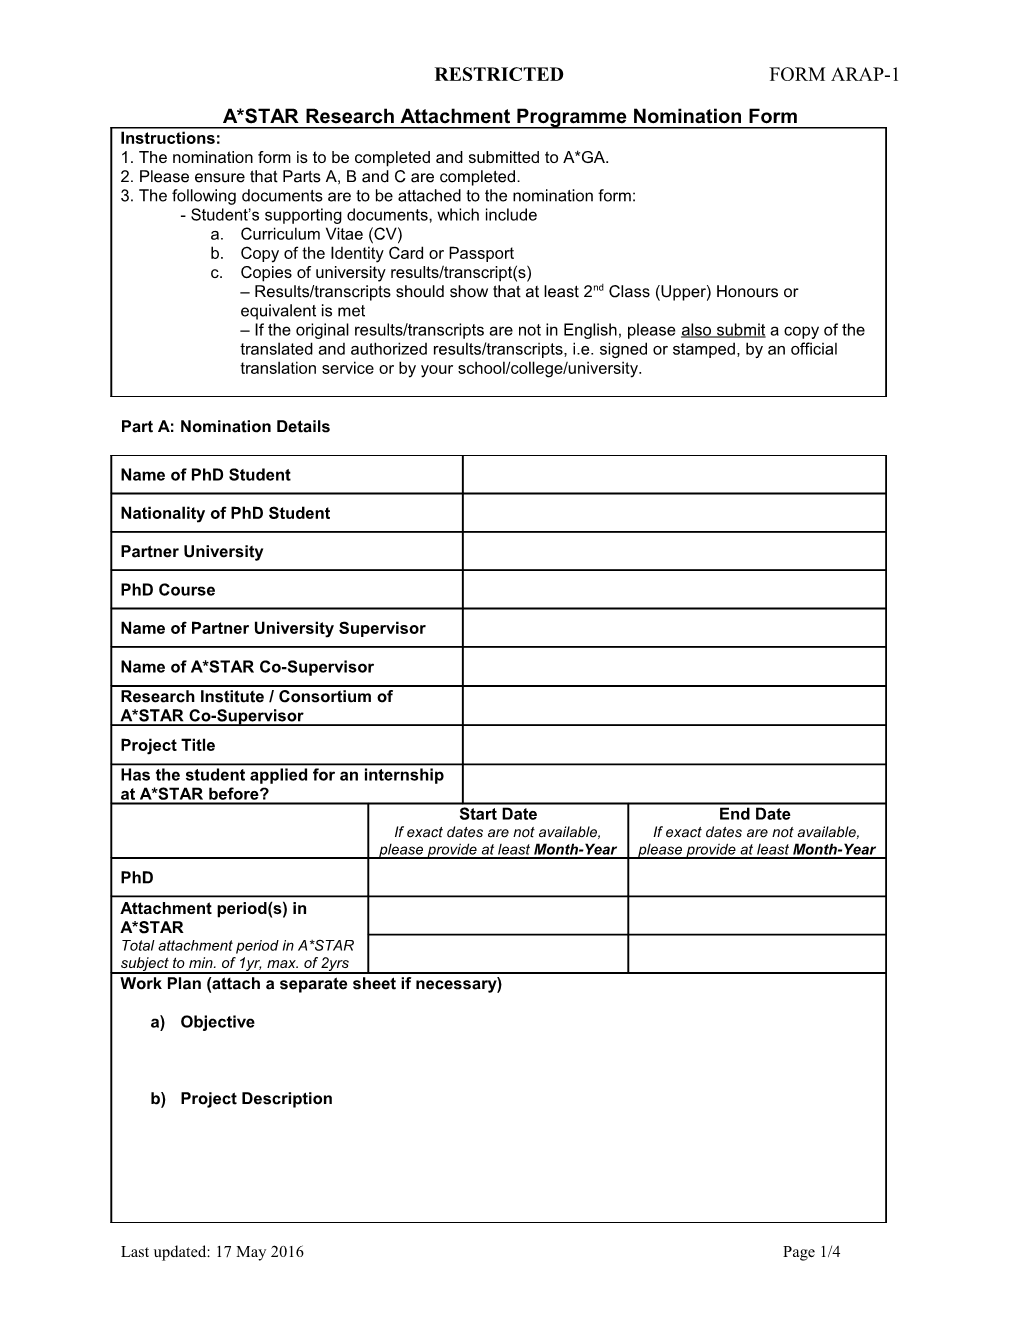 A*STAR Research Attachment Programme (ARAP) Nomination Form